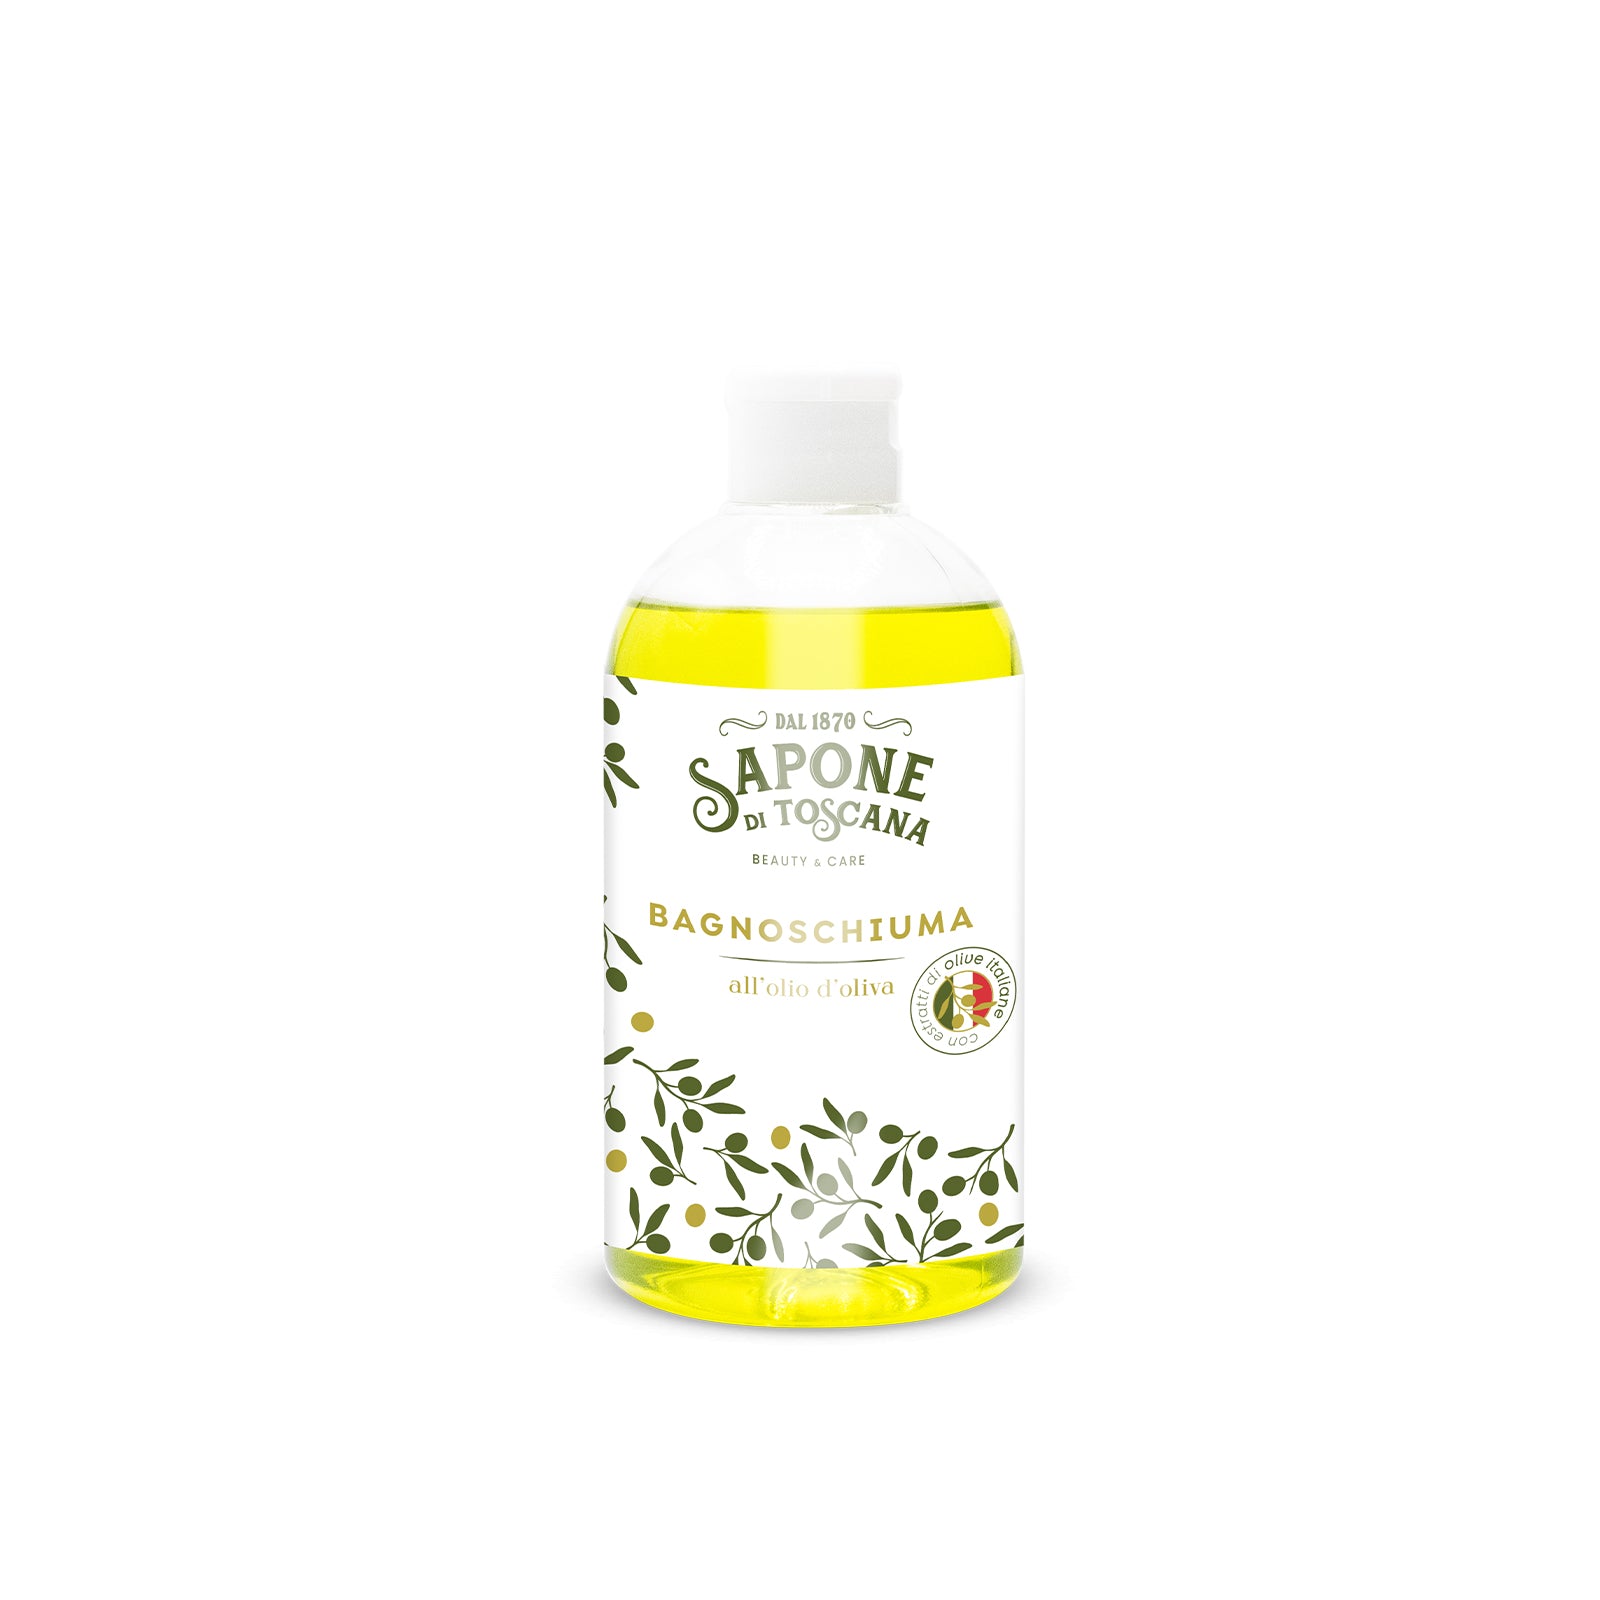 Bubble bath - Olive oil